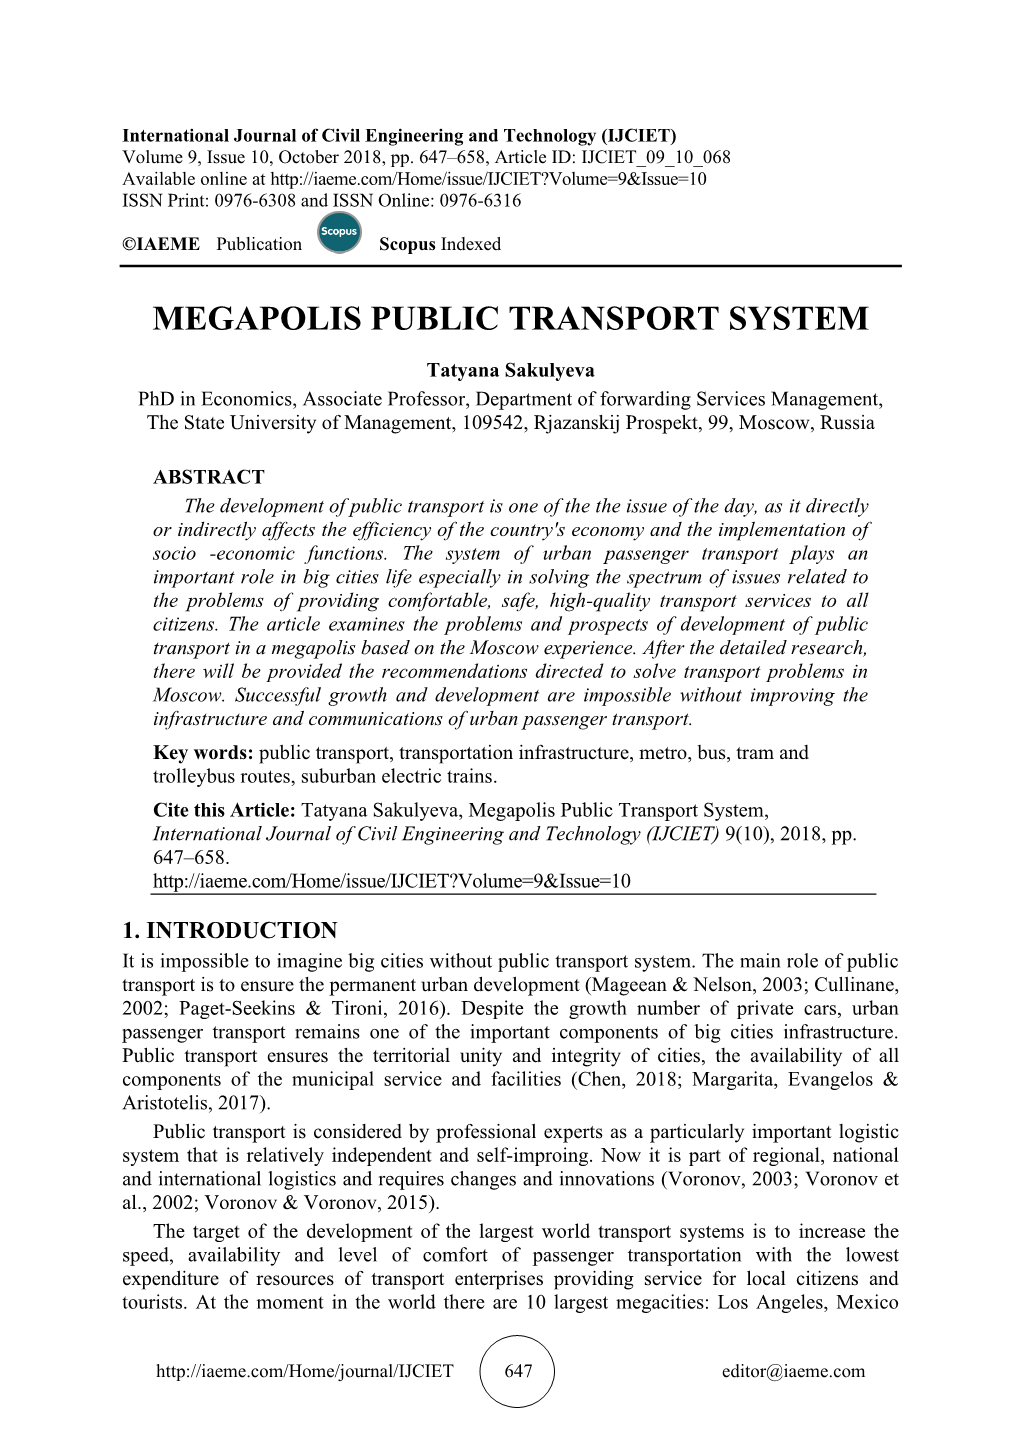 Megapolis Public Transport System